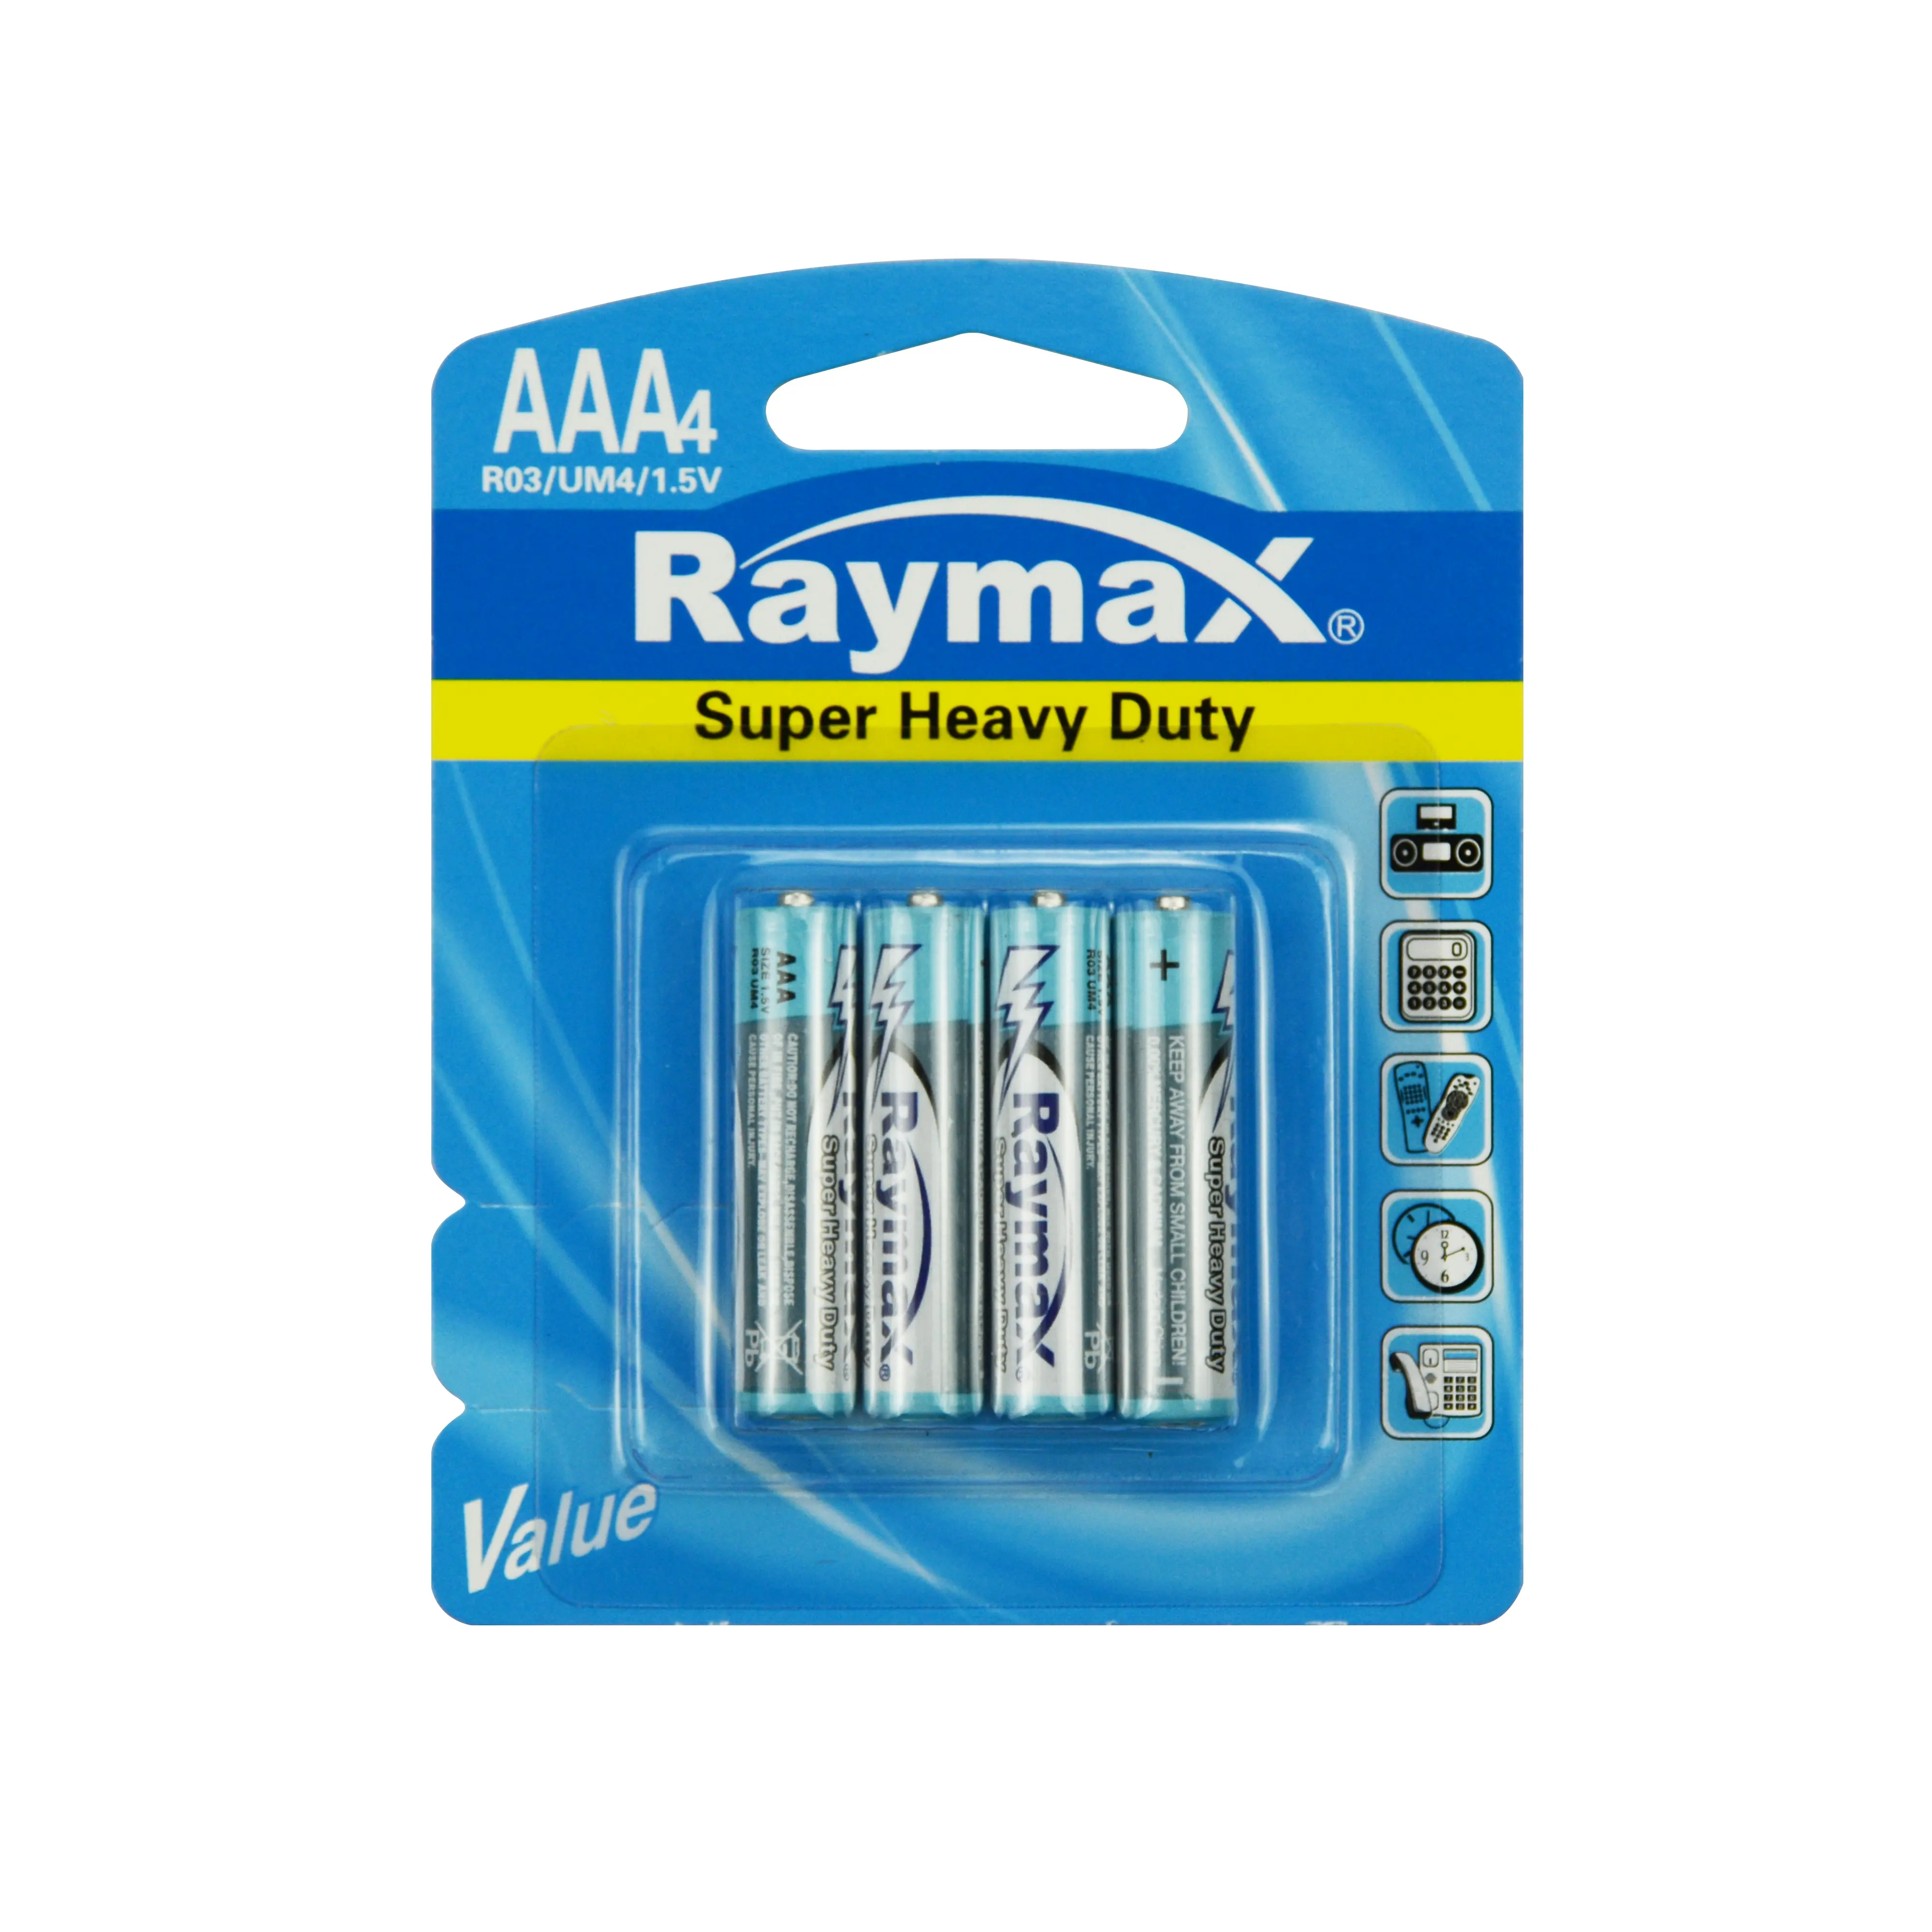 Superieure Prestaties Oem Raymax R03 Aaa 1.5V Um-4 Carbon Zink Droge Batterij Voor Klok Camera